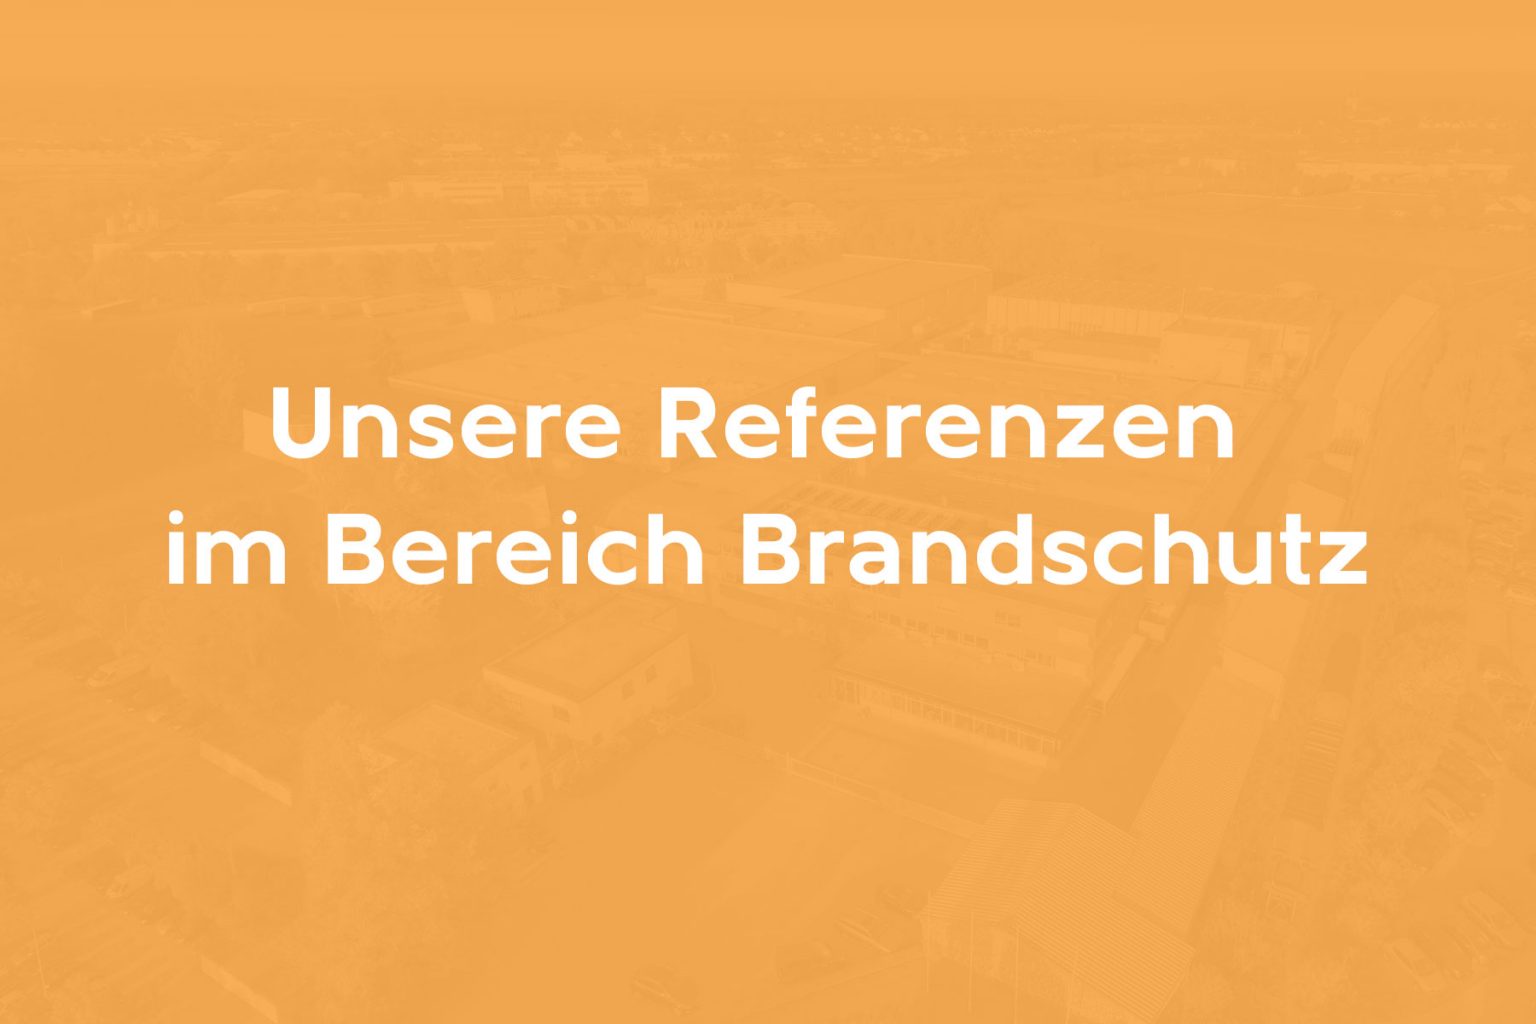 bayerwald fruechte brandschutz overlay 1536x1024